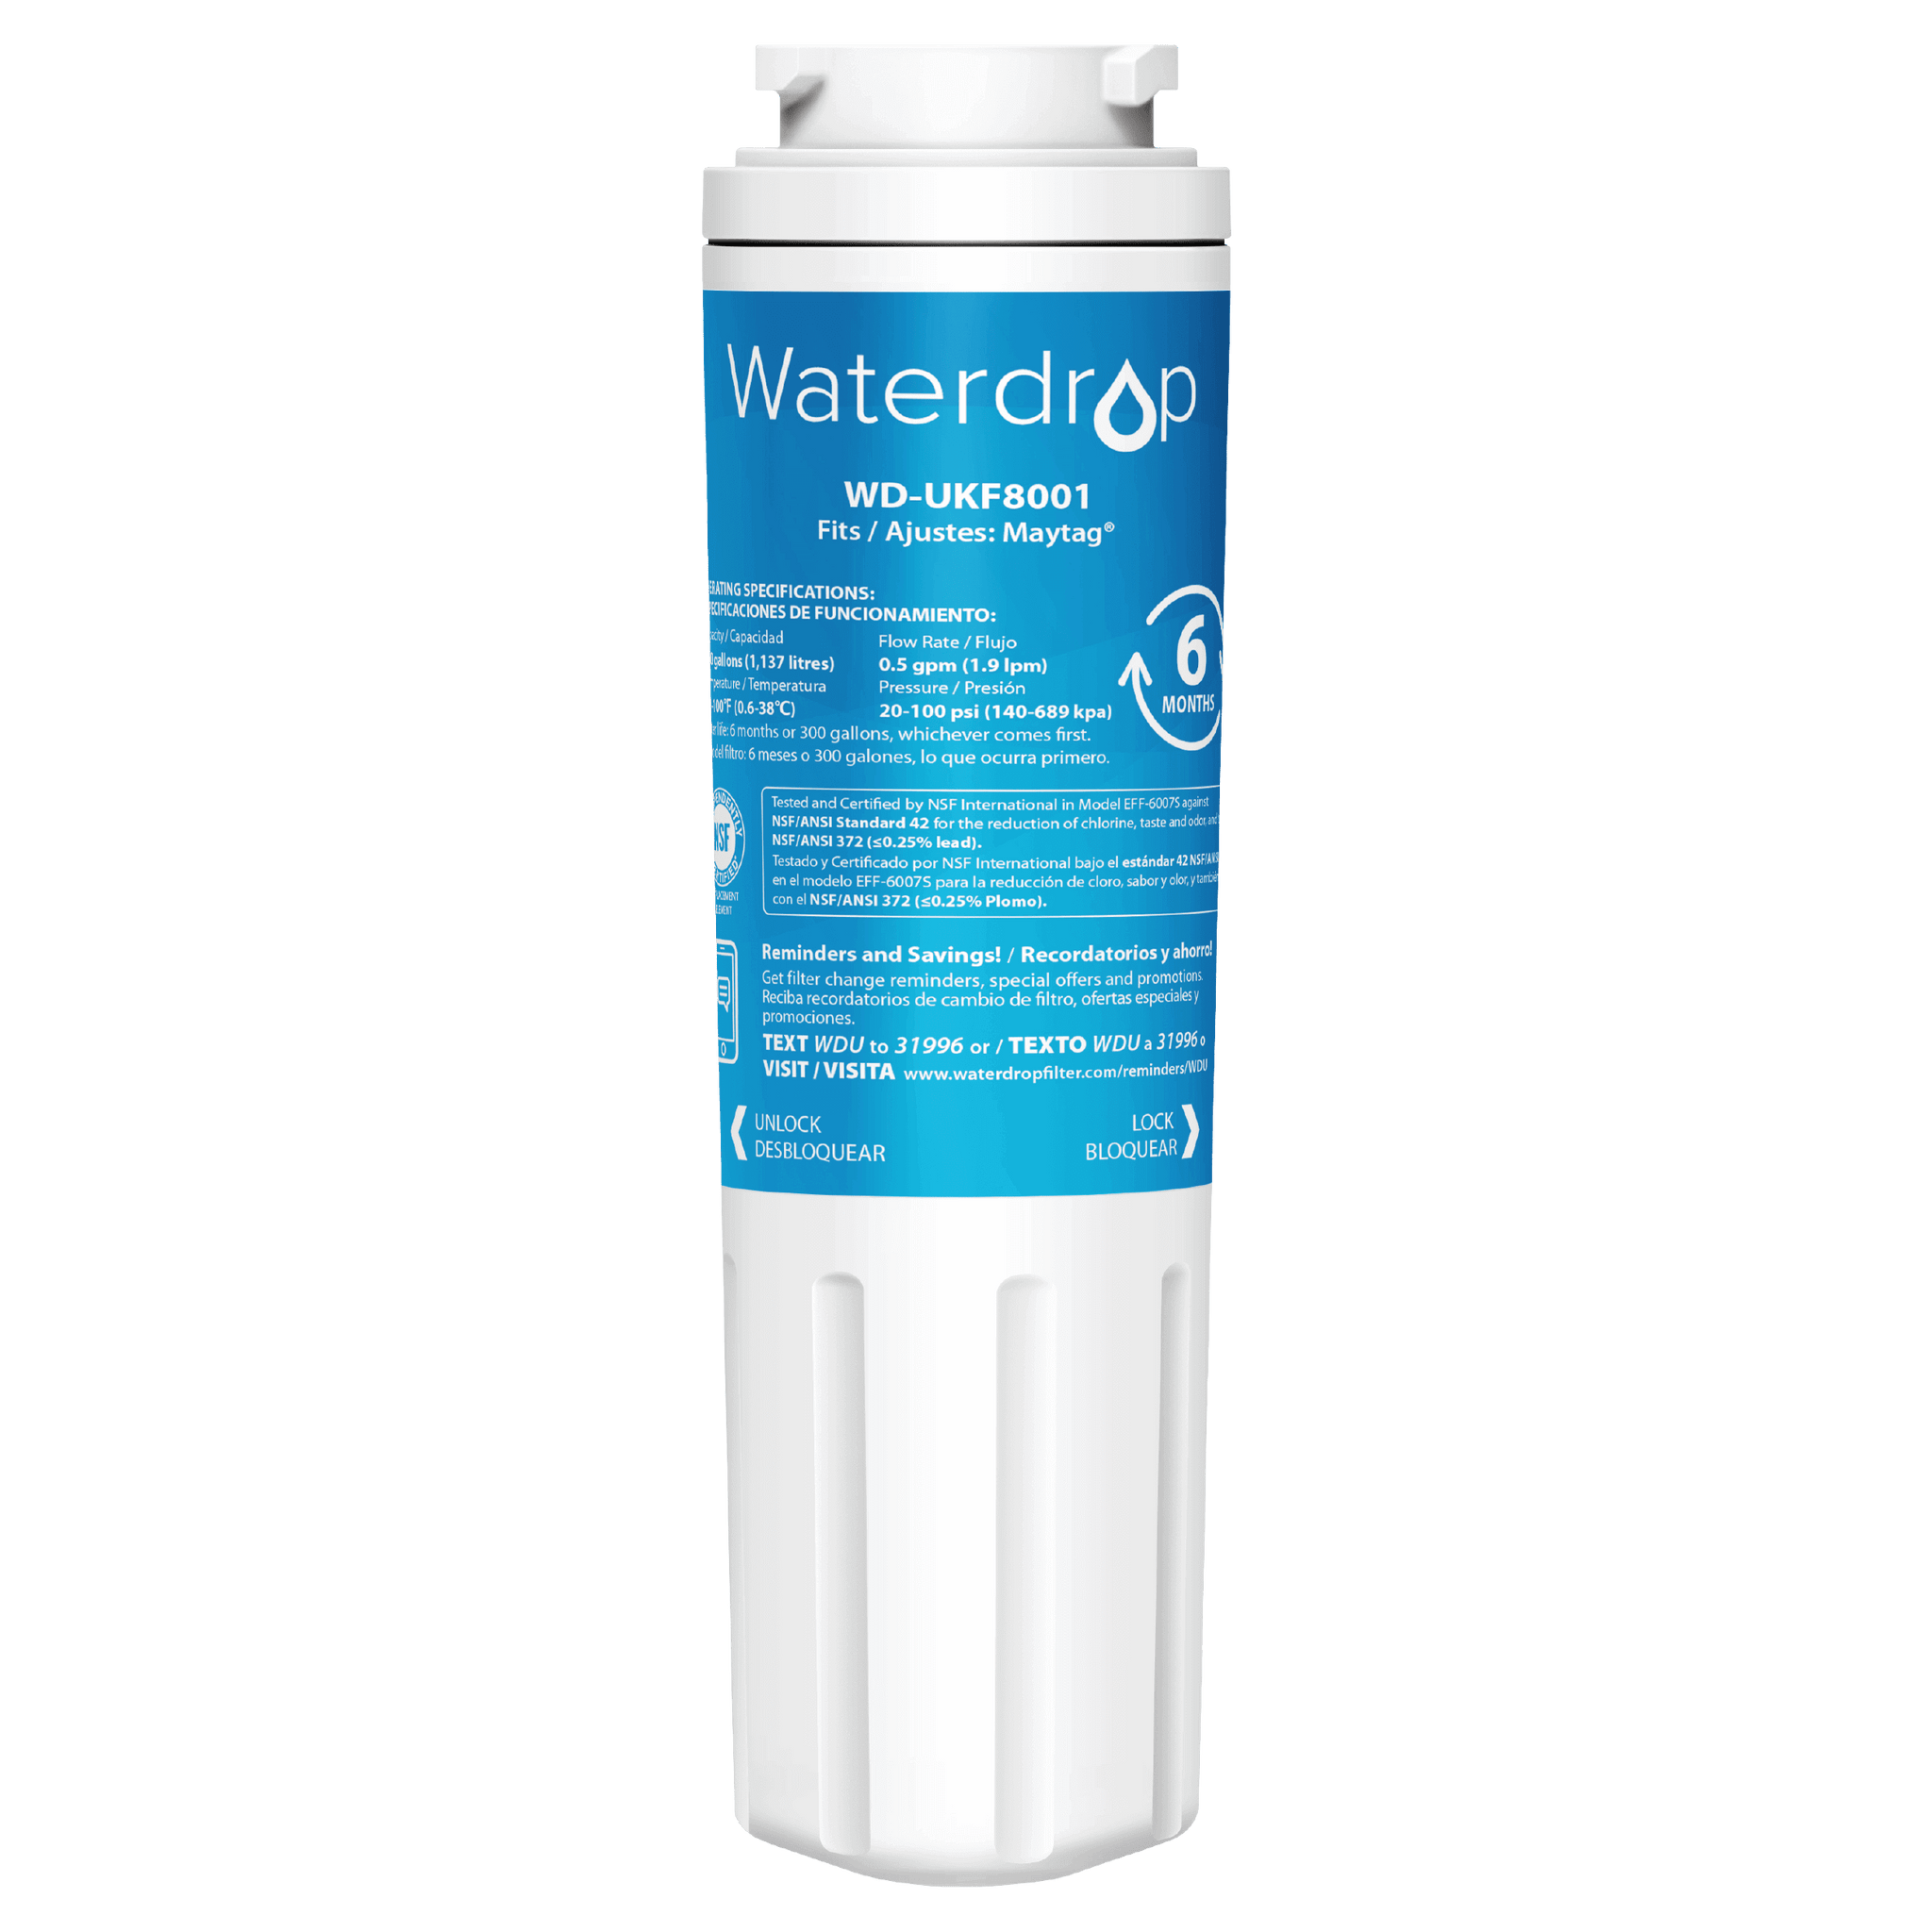 Waterdrop Replacement for Everydrop Filter 4, UKF8001 Refrigerator Water Filter